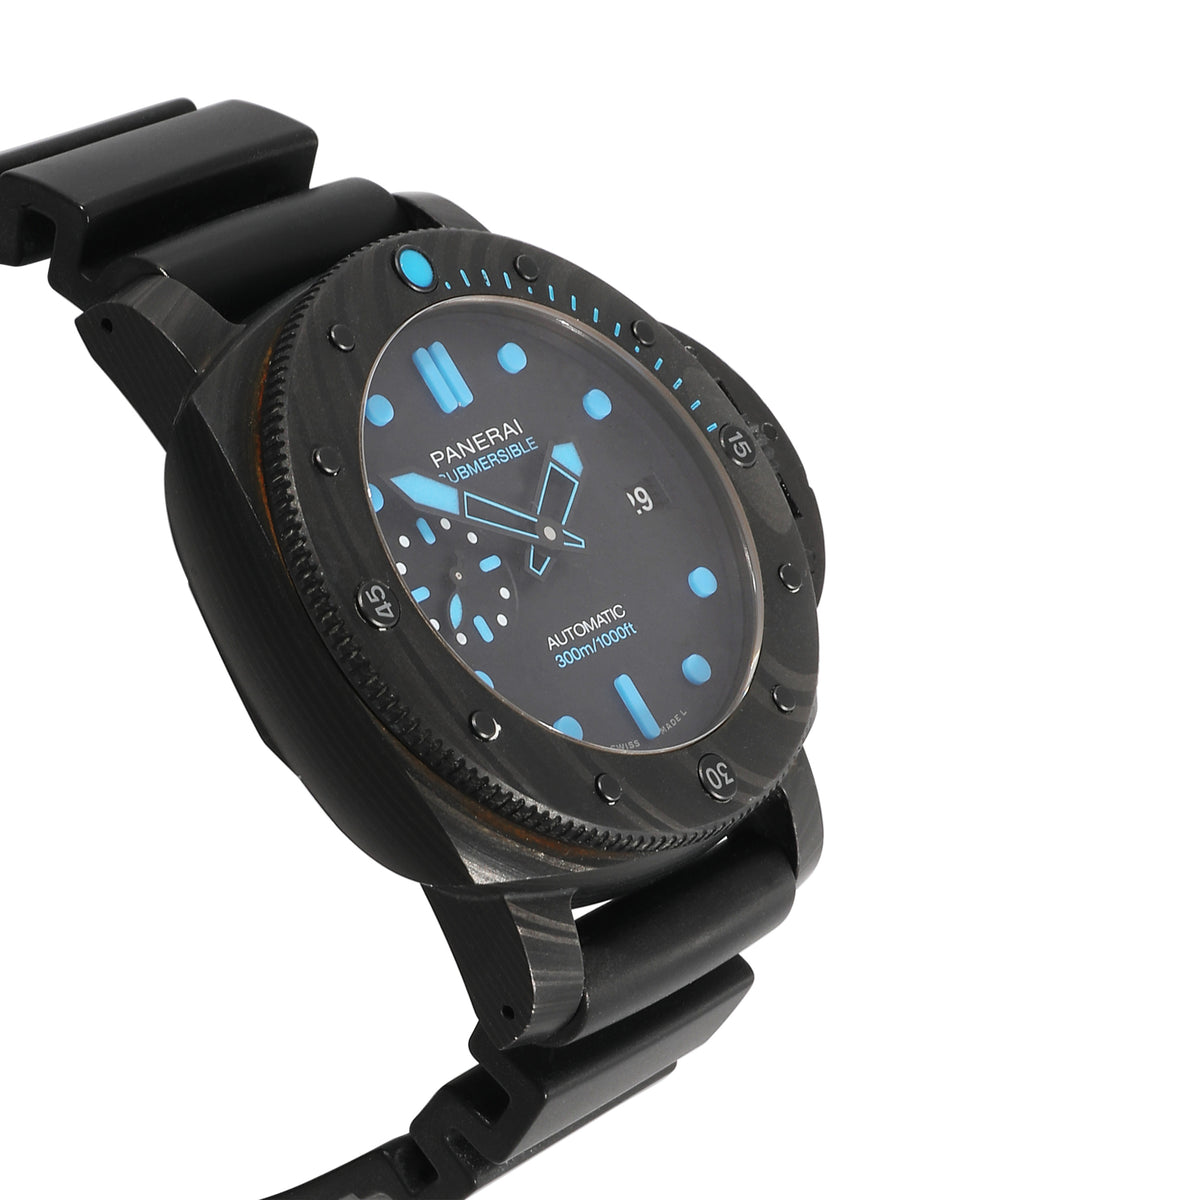 Luminor Submersible Carbontech PAM00960 Men's Watch in  Carbon Fiber